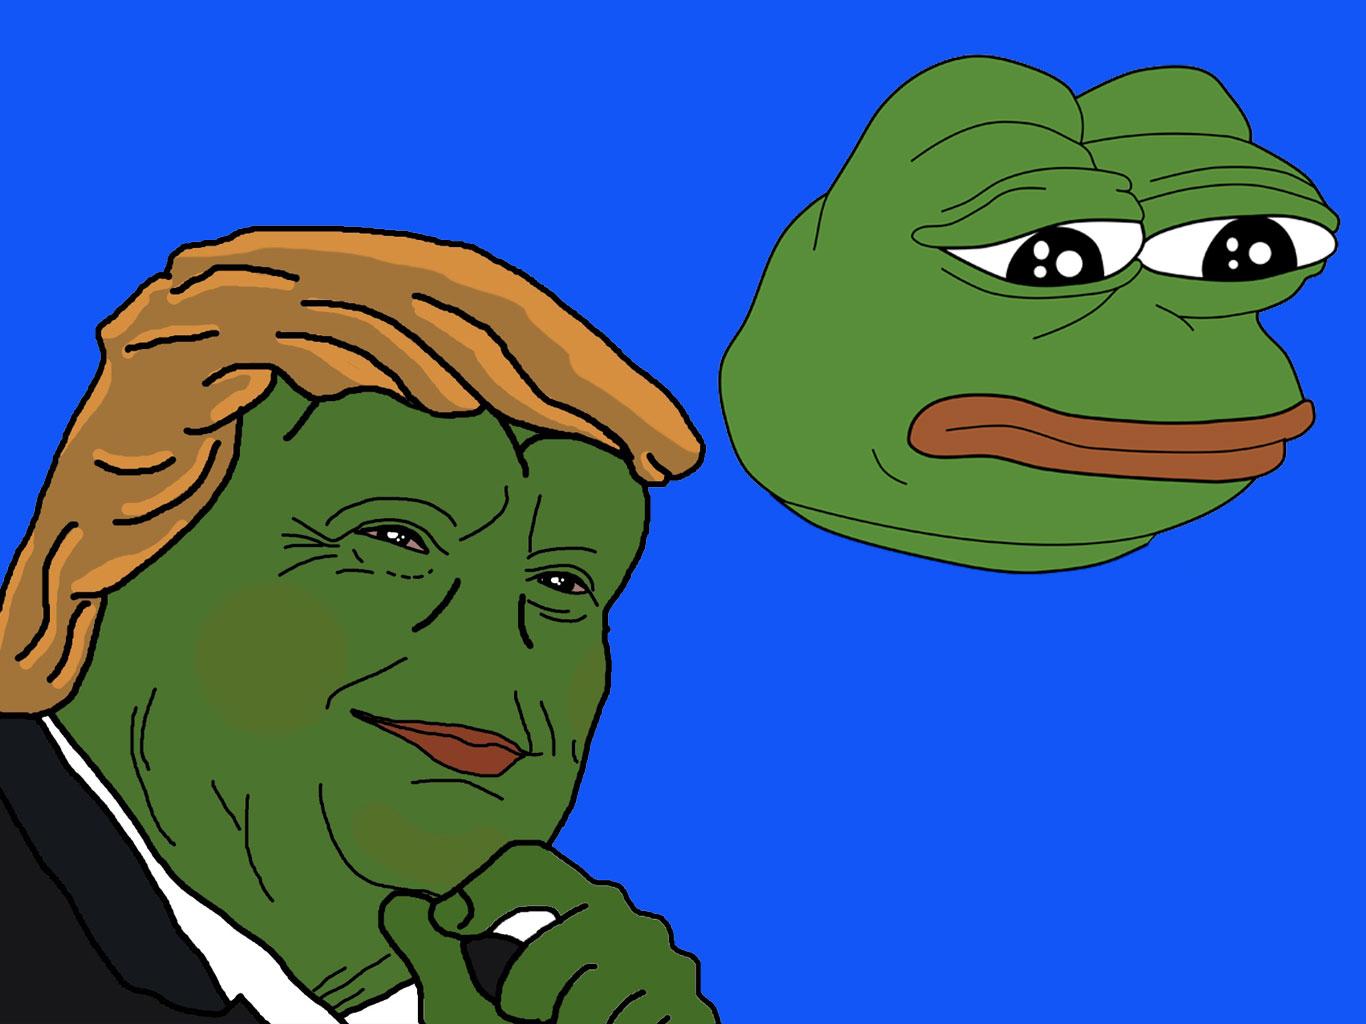 A Donald Trump meme using Pepe's image